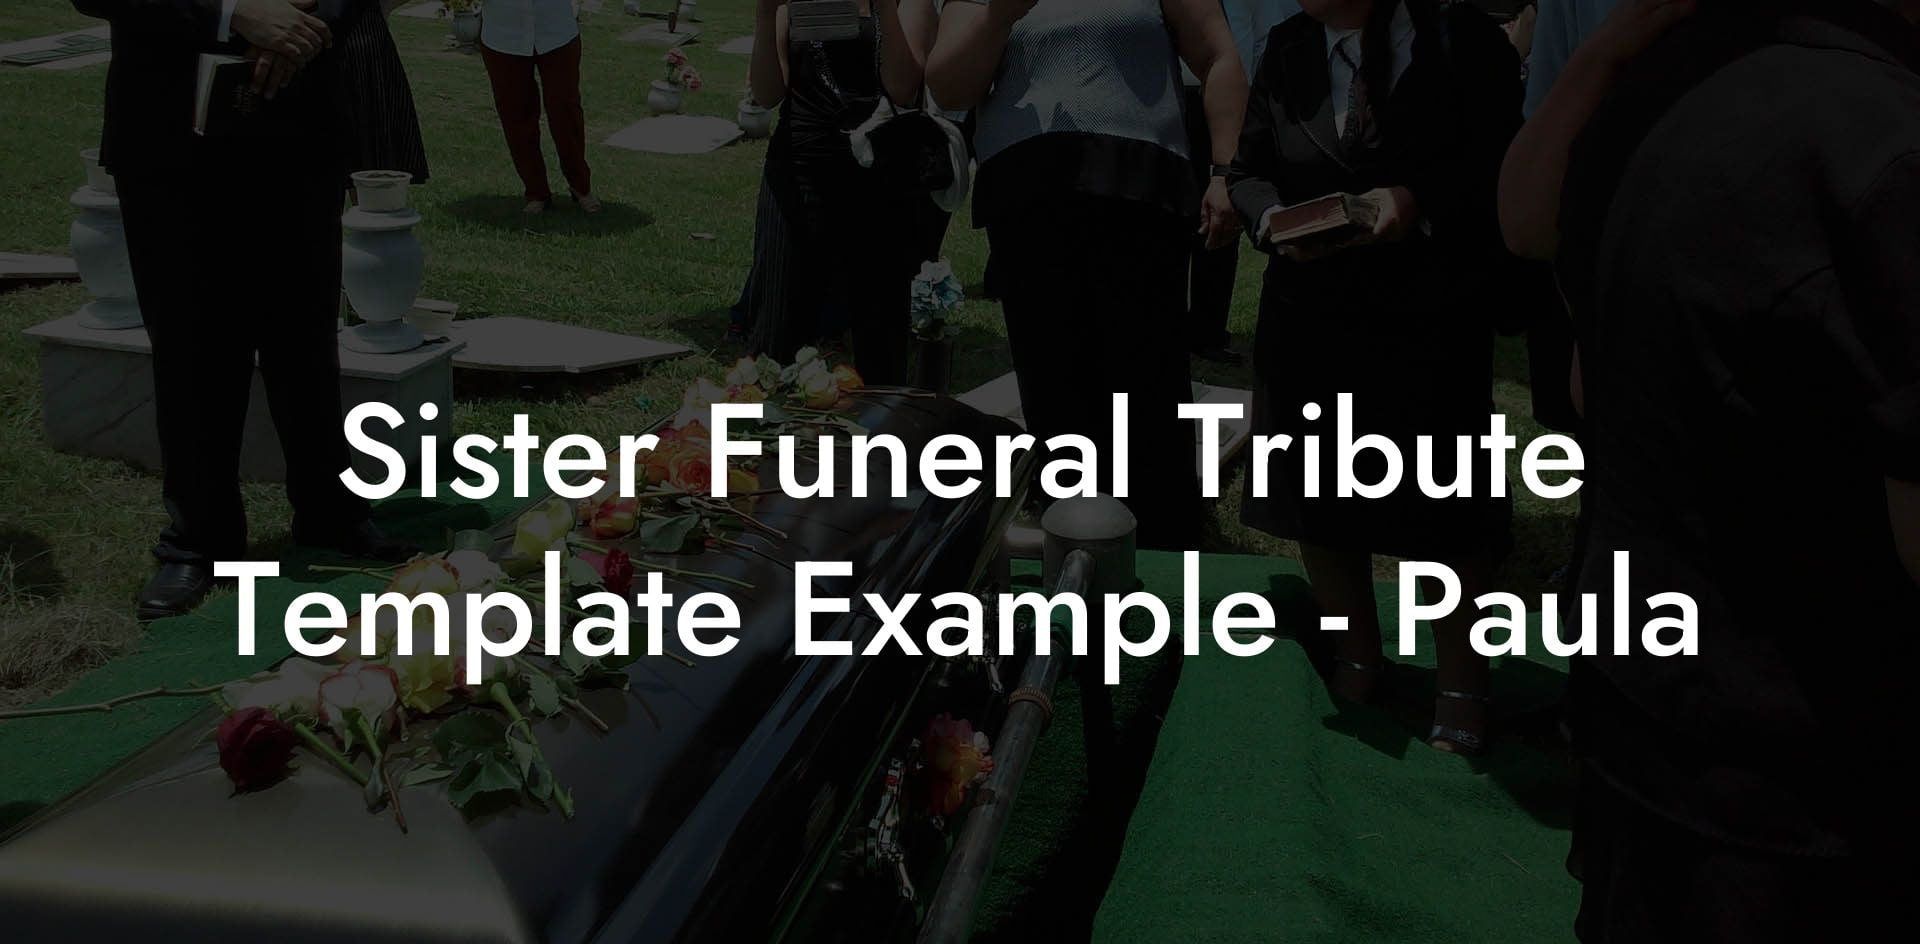 Sister Funeral Tribute Template Example - Paula